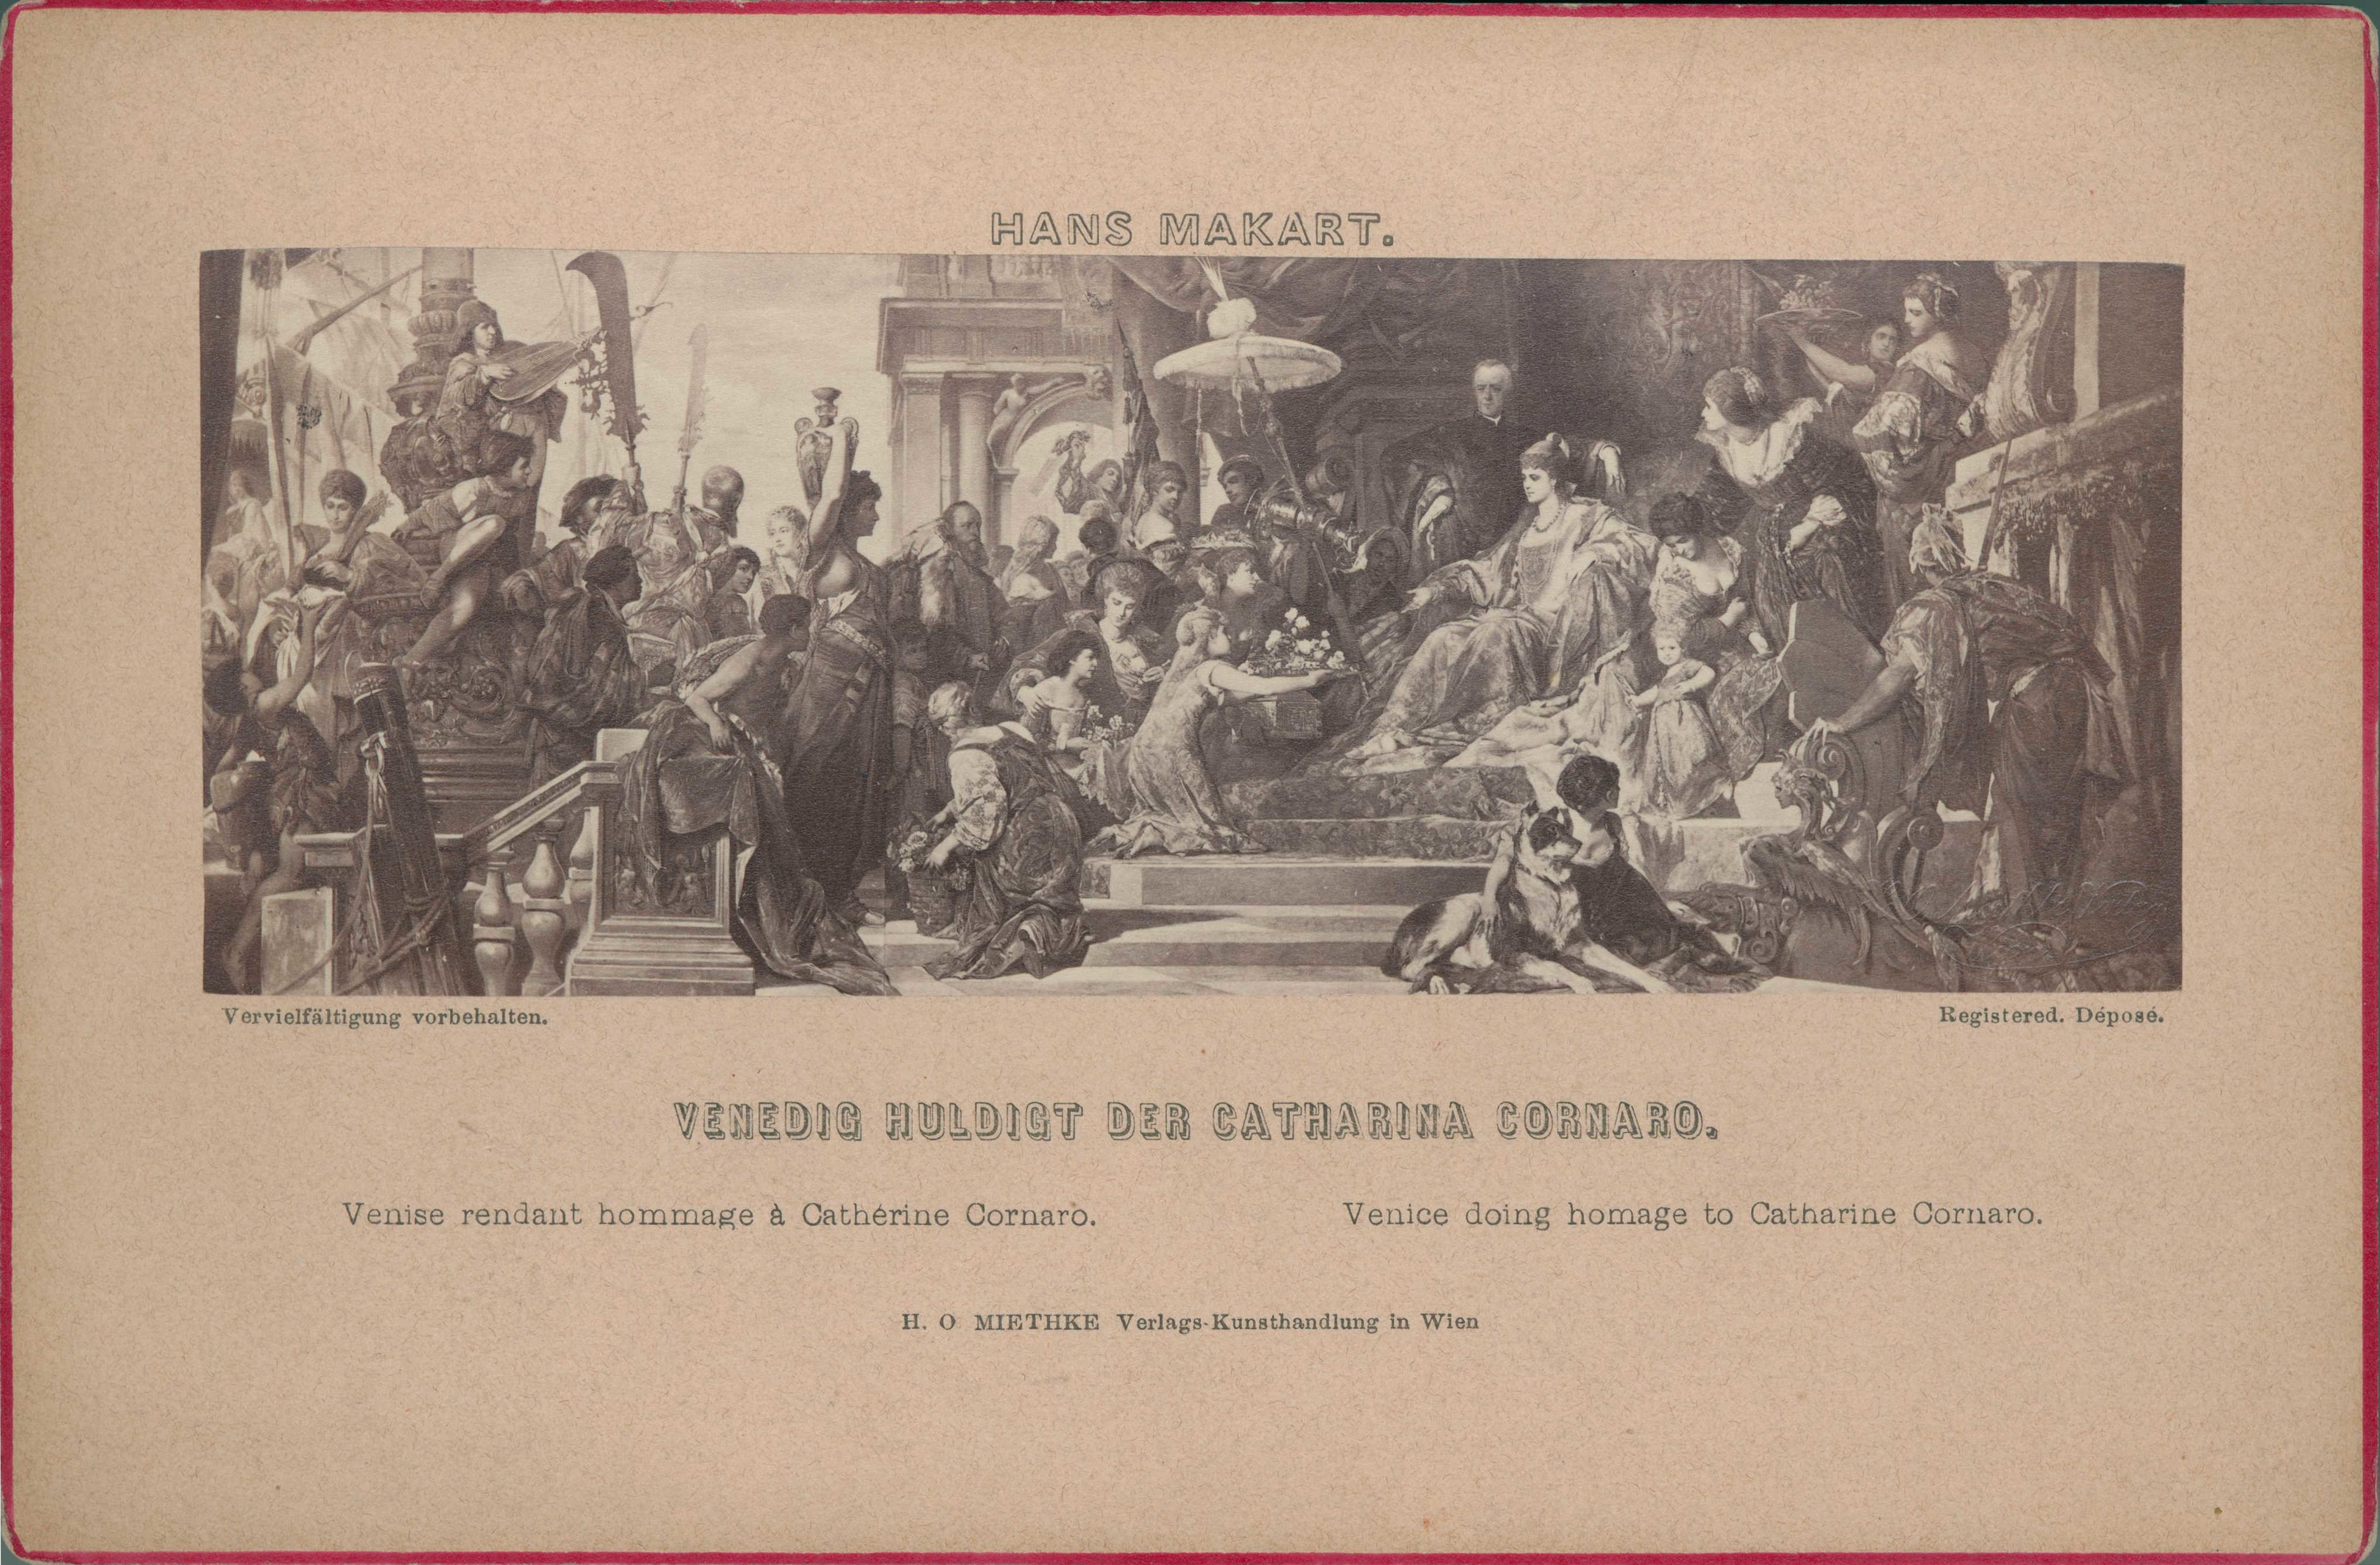 "Venedig huldigt der Catharina Cornaro" von Hans Makart (gedruckt nach 1875), 89531 (O. H. Miethke Verlags-Kunsthandlung CC BY-NC-SA)